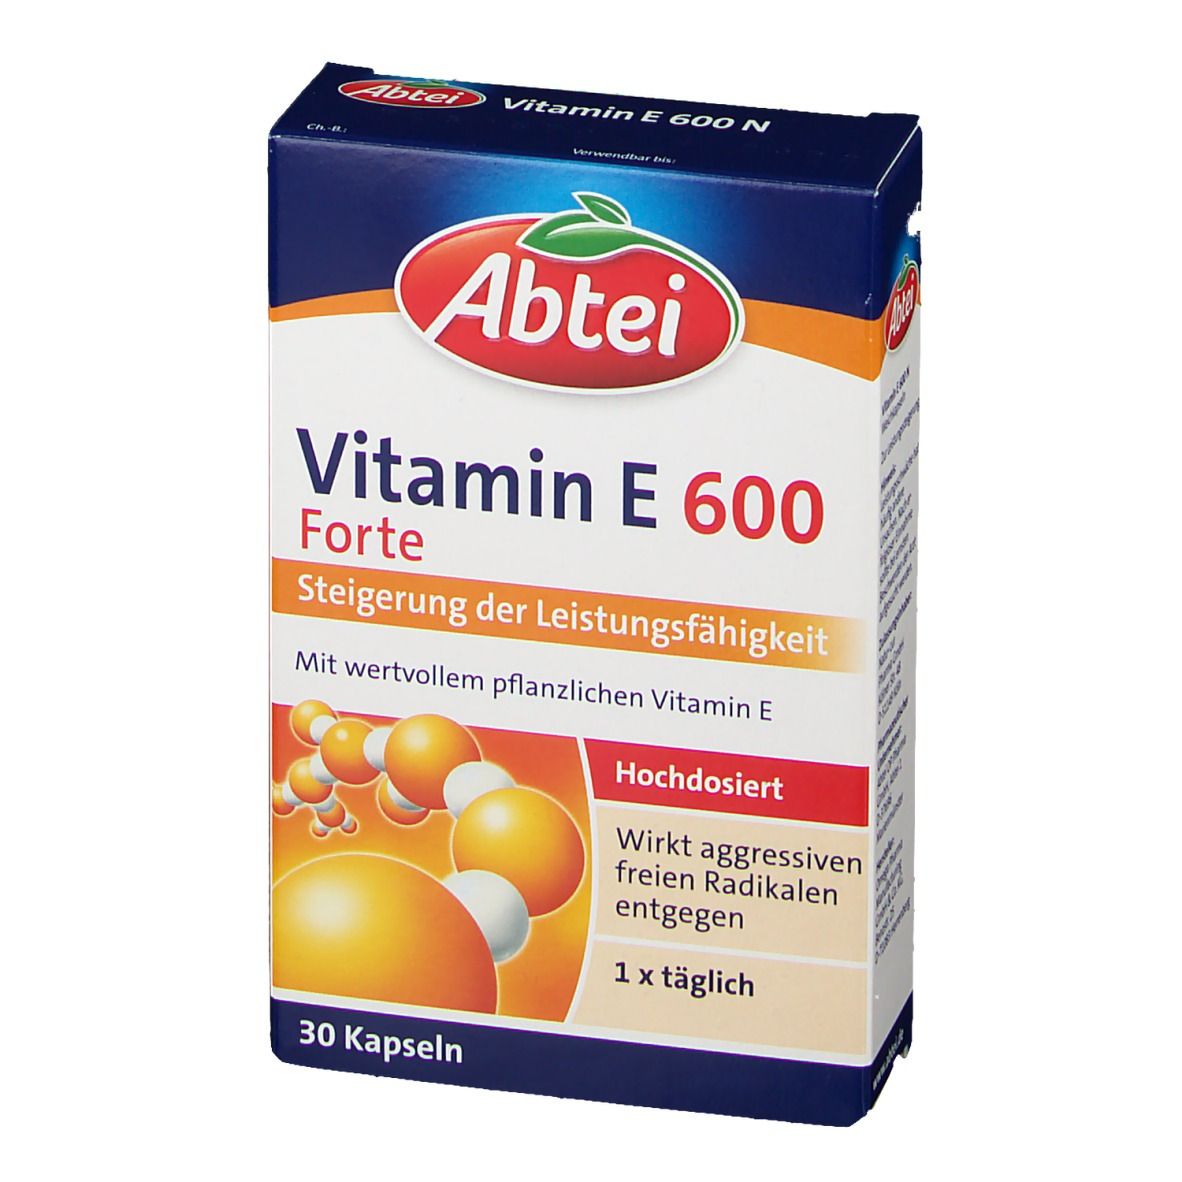 Abtei Vitamin E 600